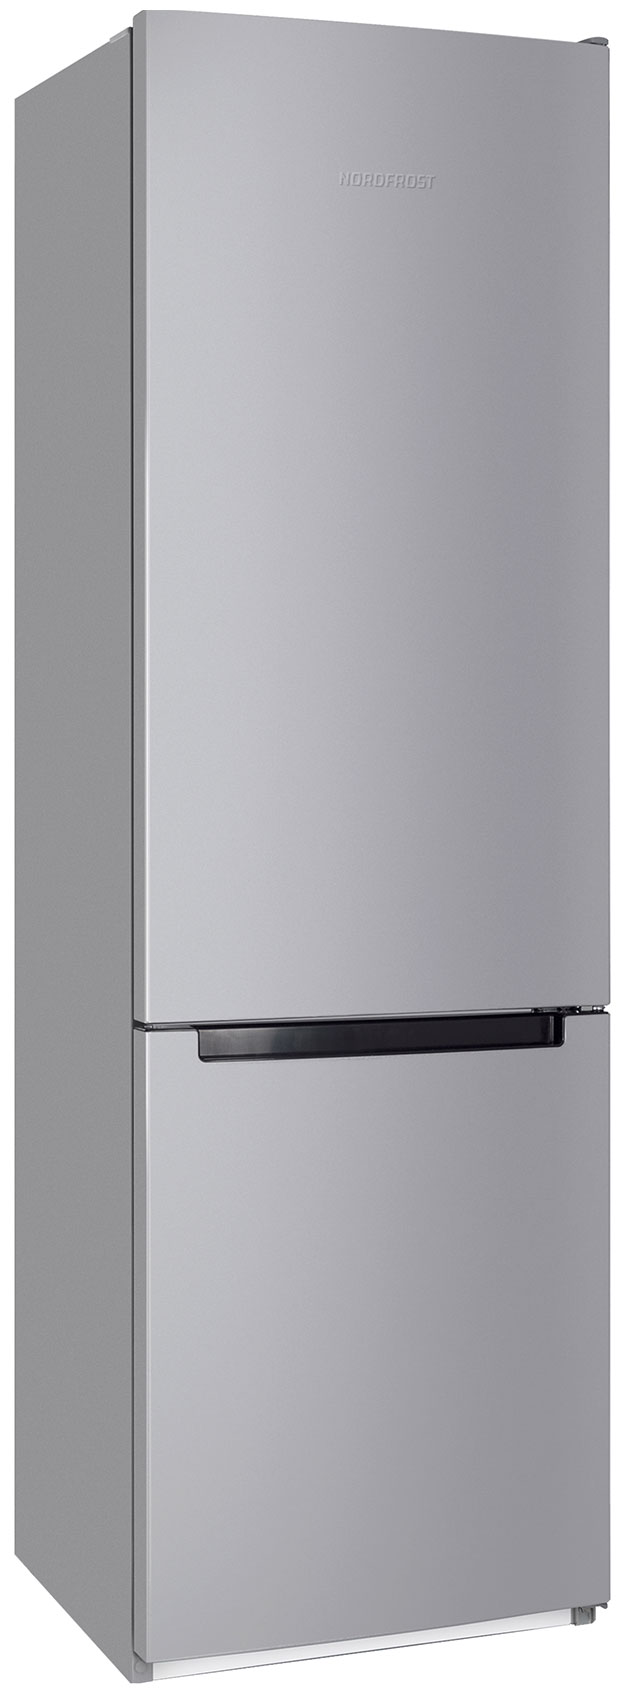 Холодильник NordFrost NRB 134 S серебристый двухкамерный холодильник liebherr cnsfd 5733 20 001 серебристый